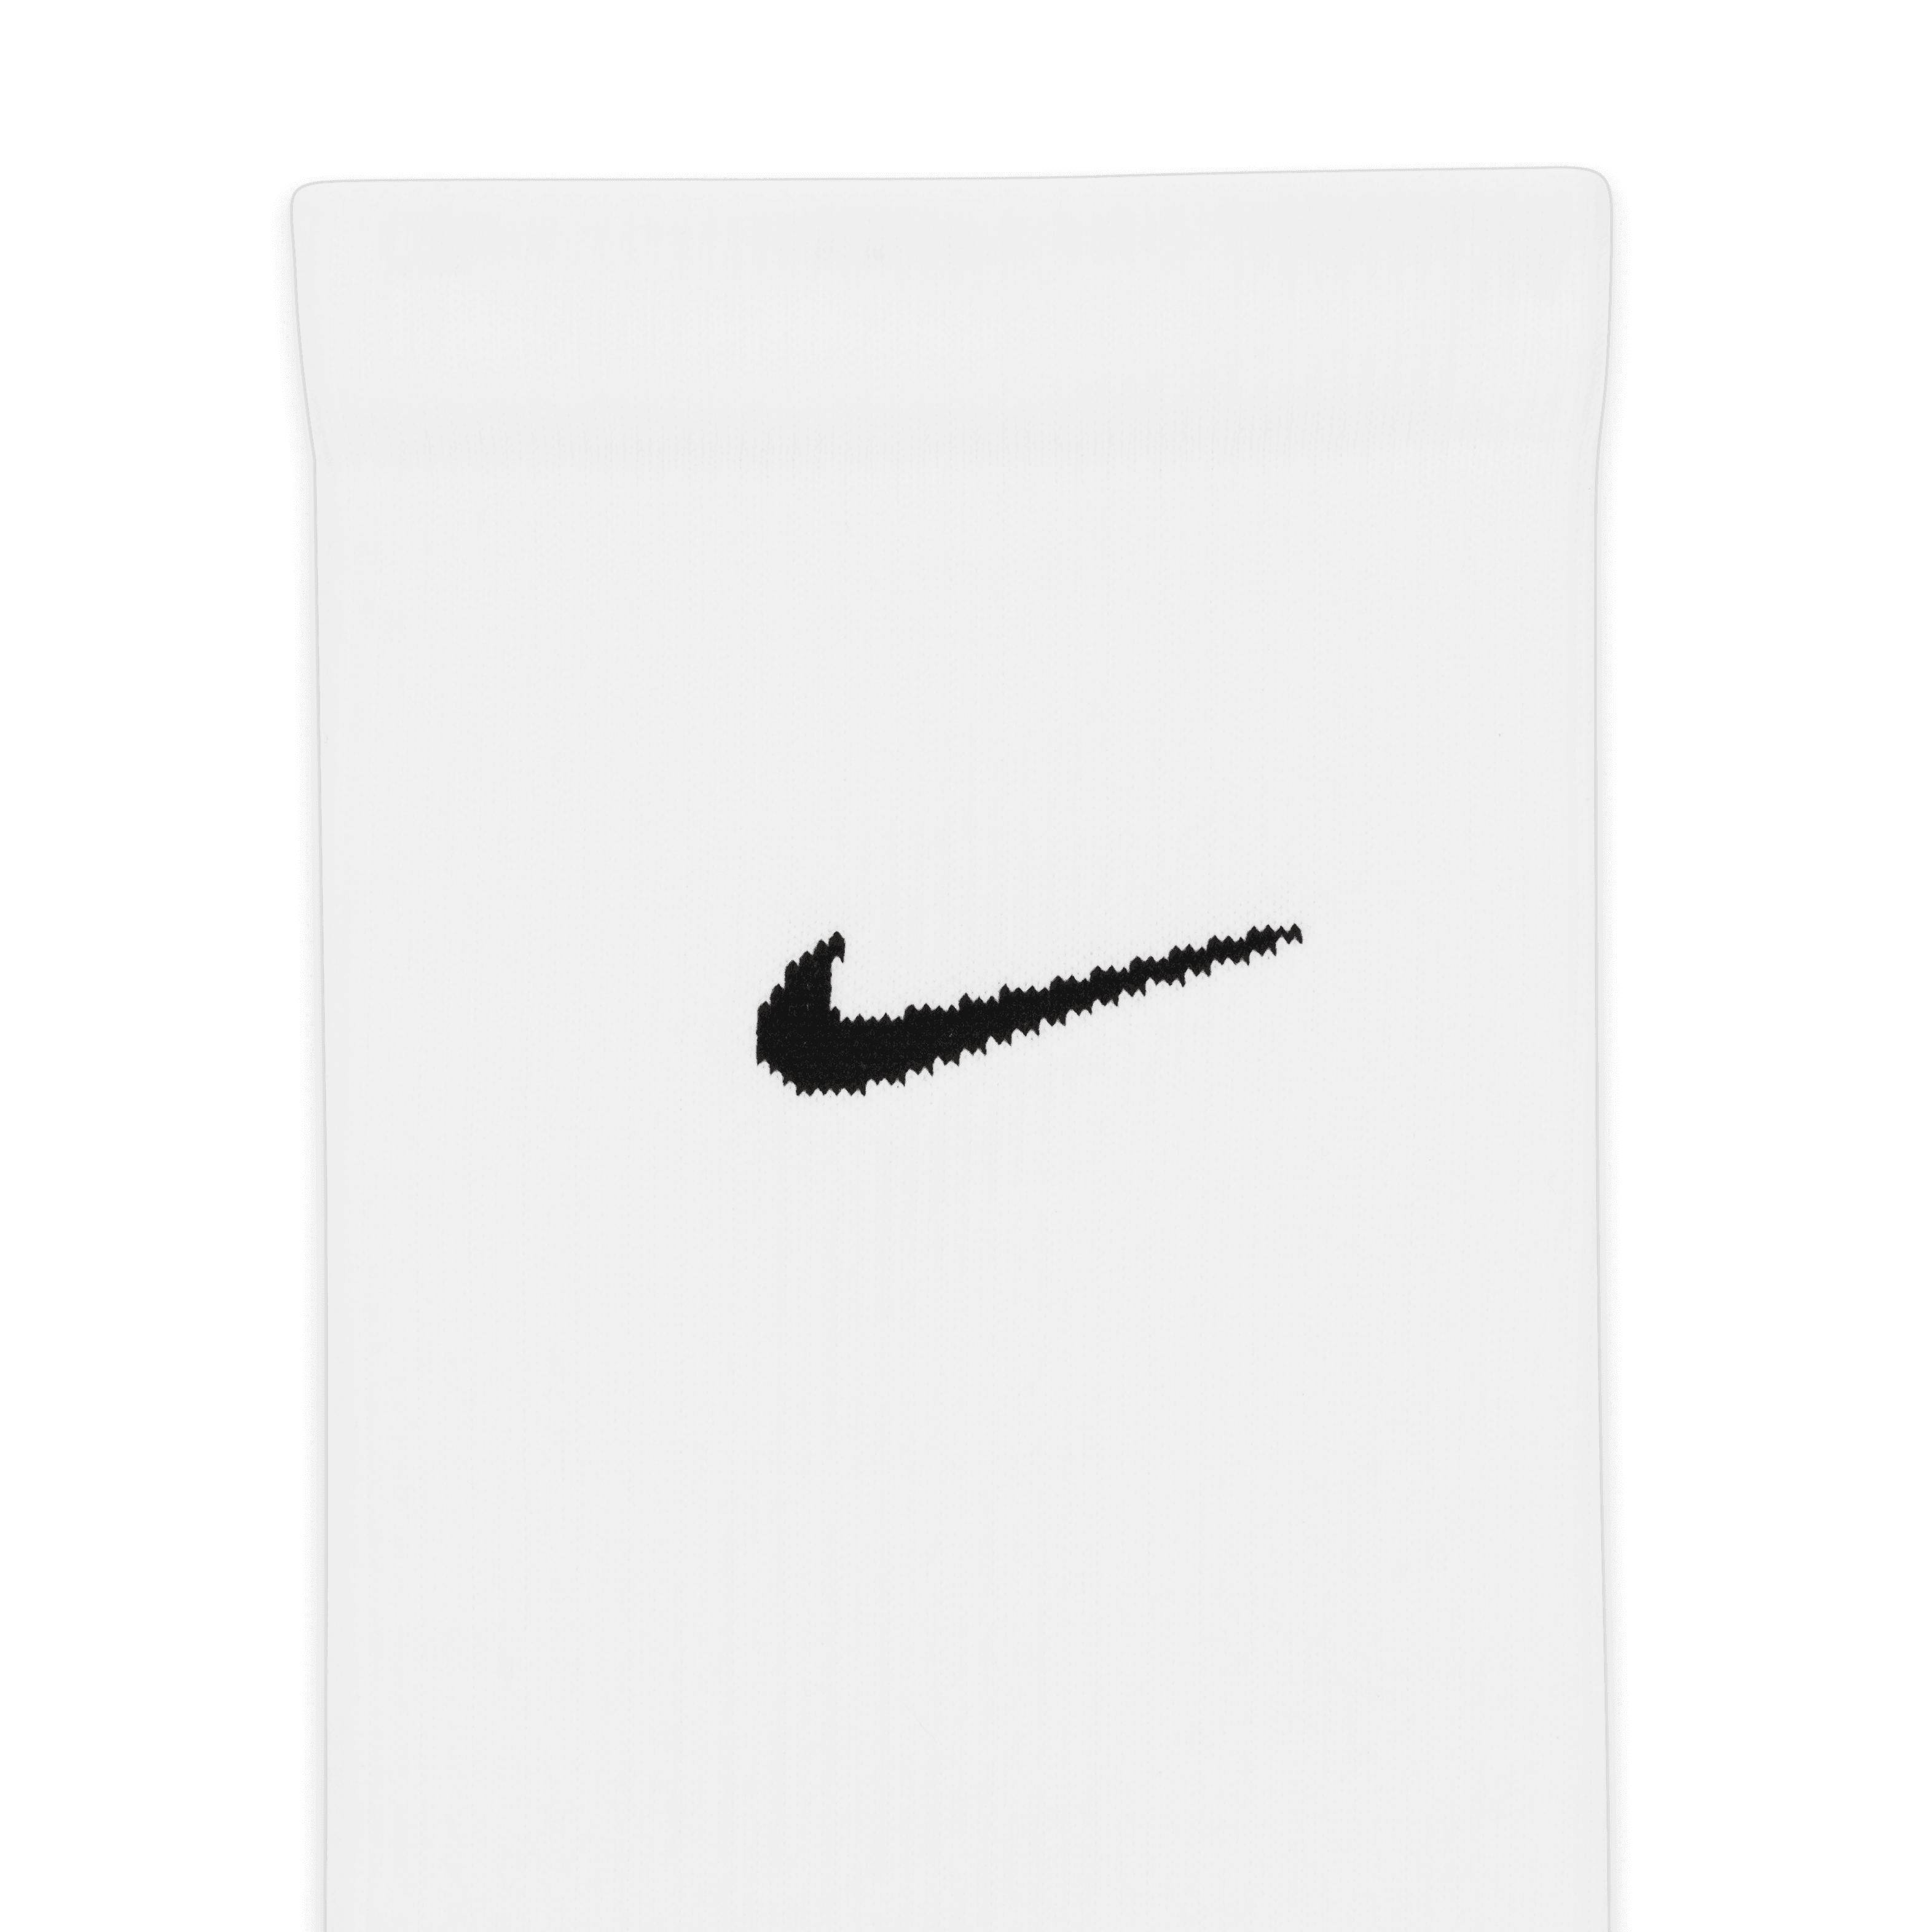 Nike Grip Vapor Strike Soccer Socks-White/Grey